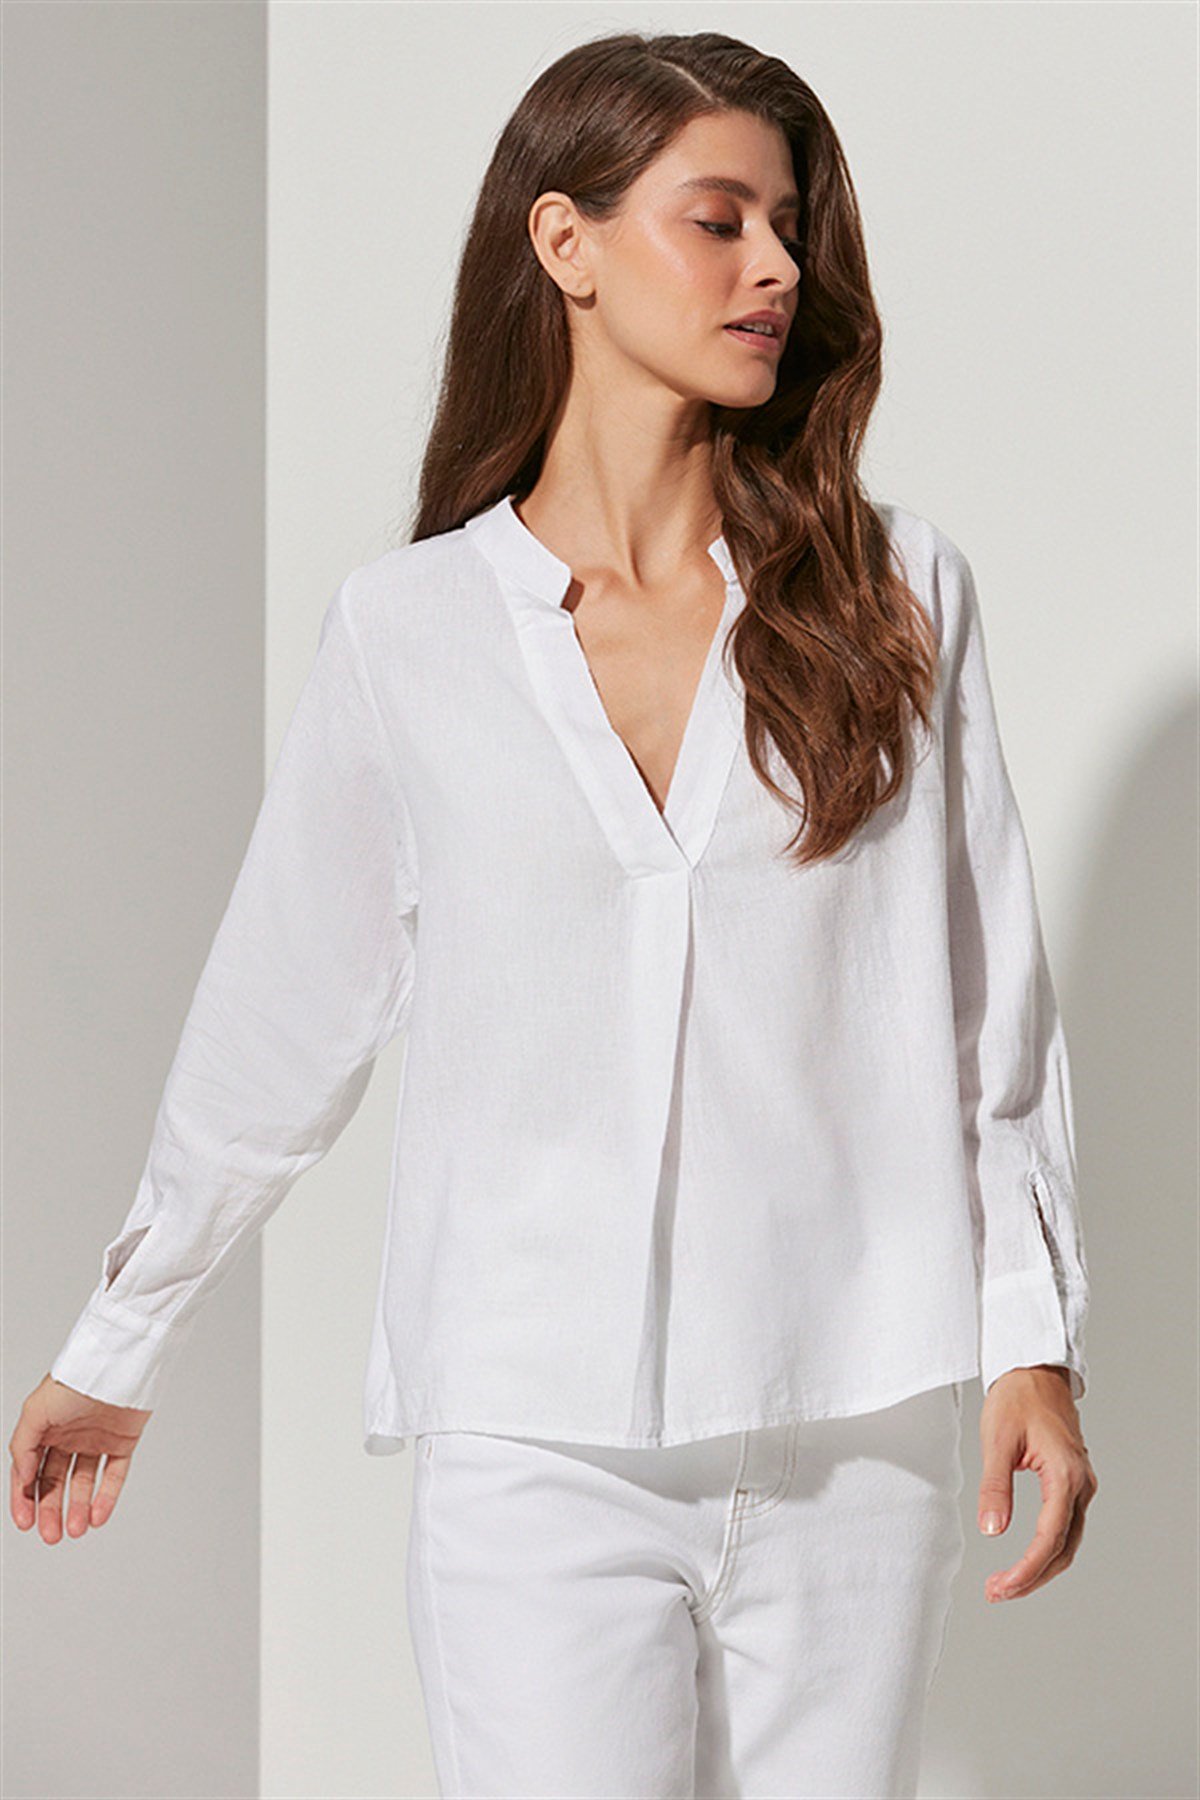 White by Nature - Plikaşe Beyaz Kadın Bluz